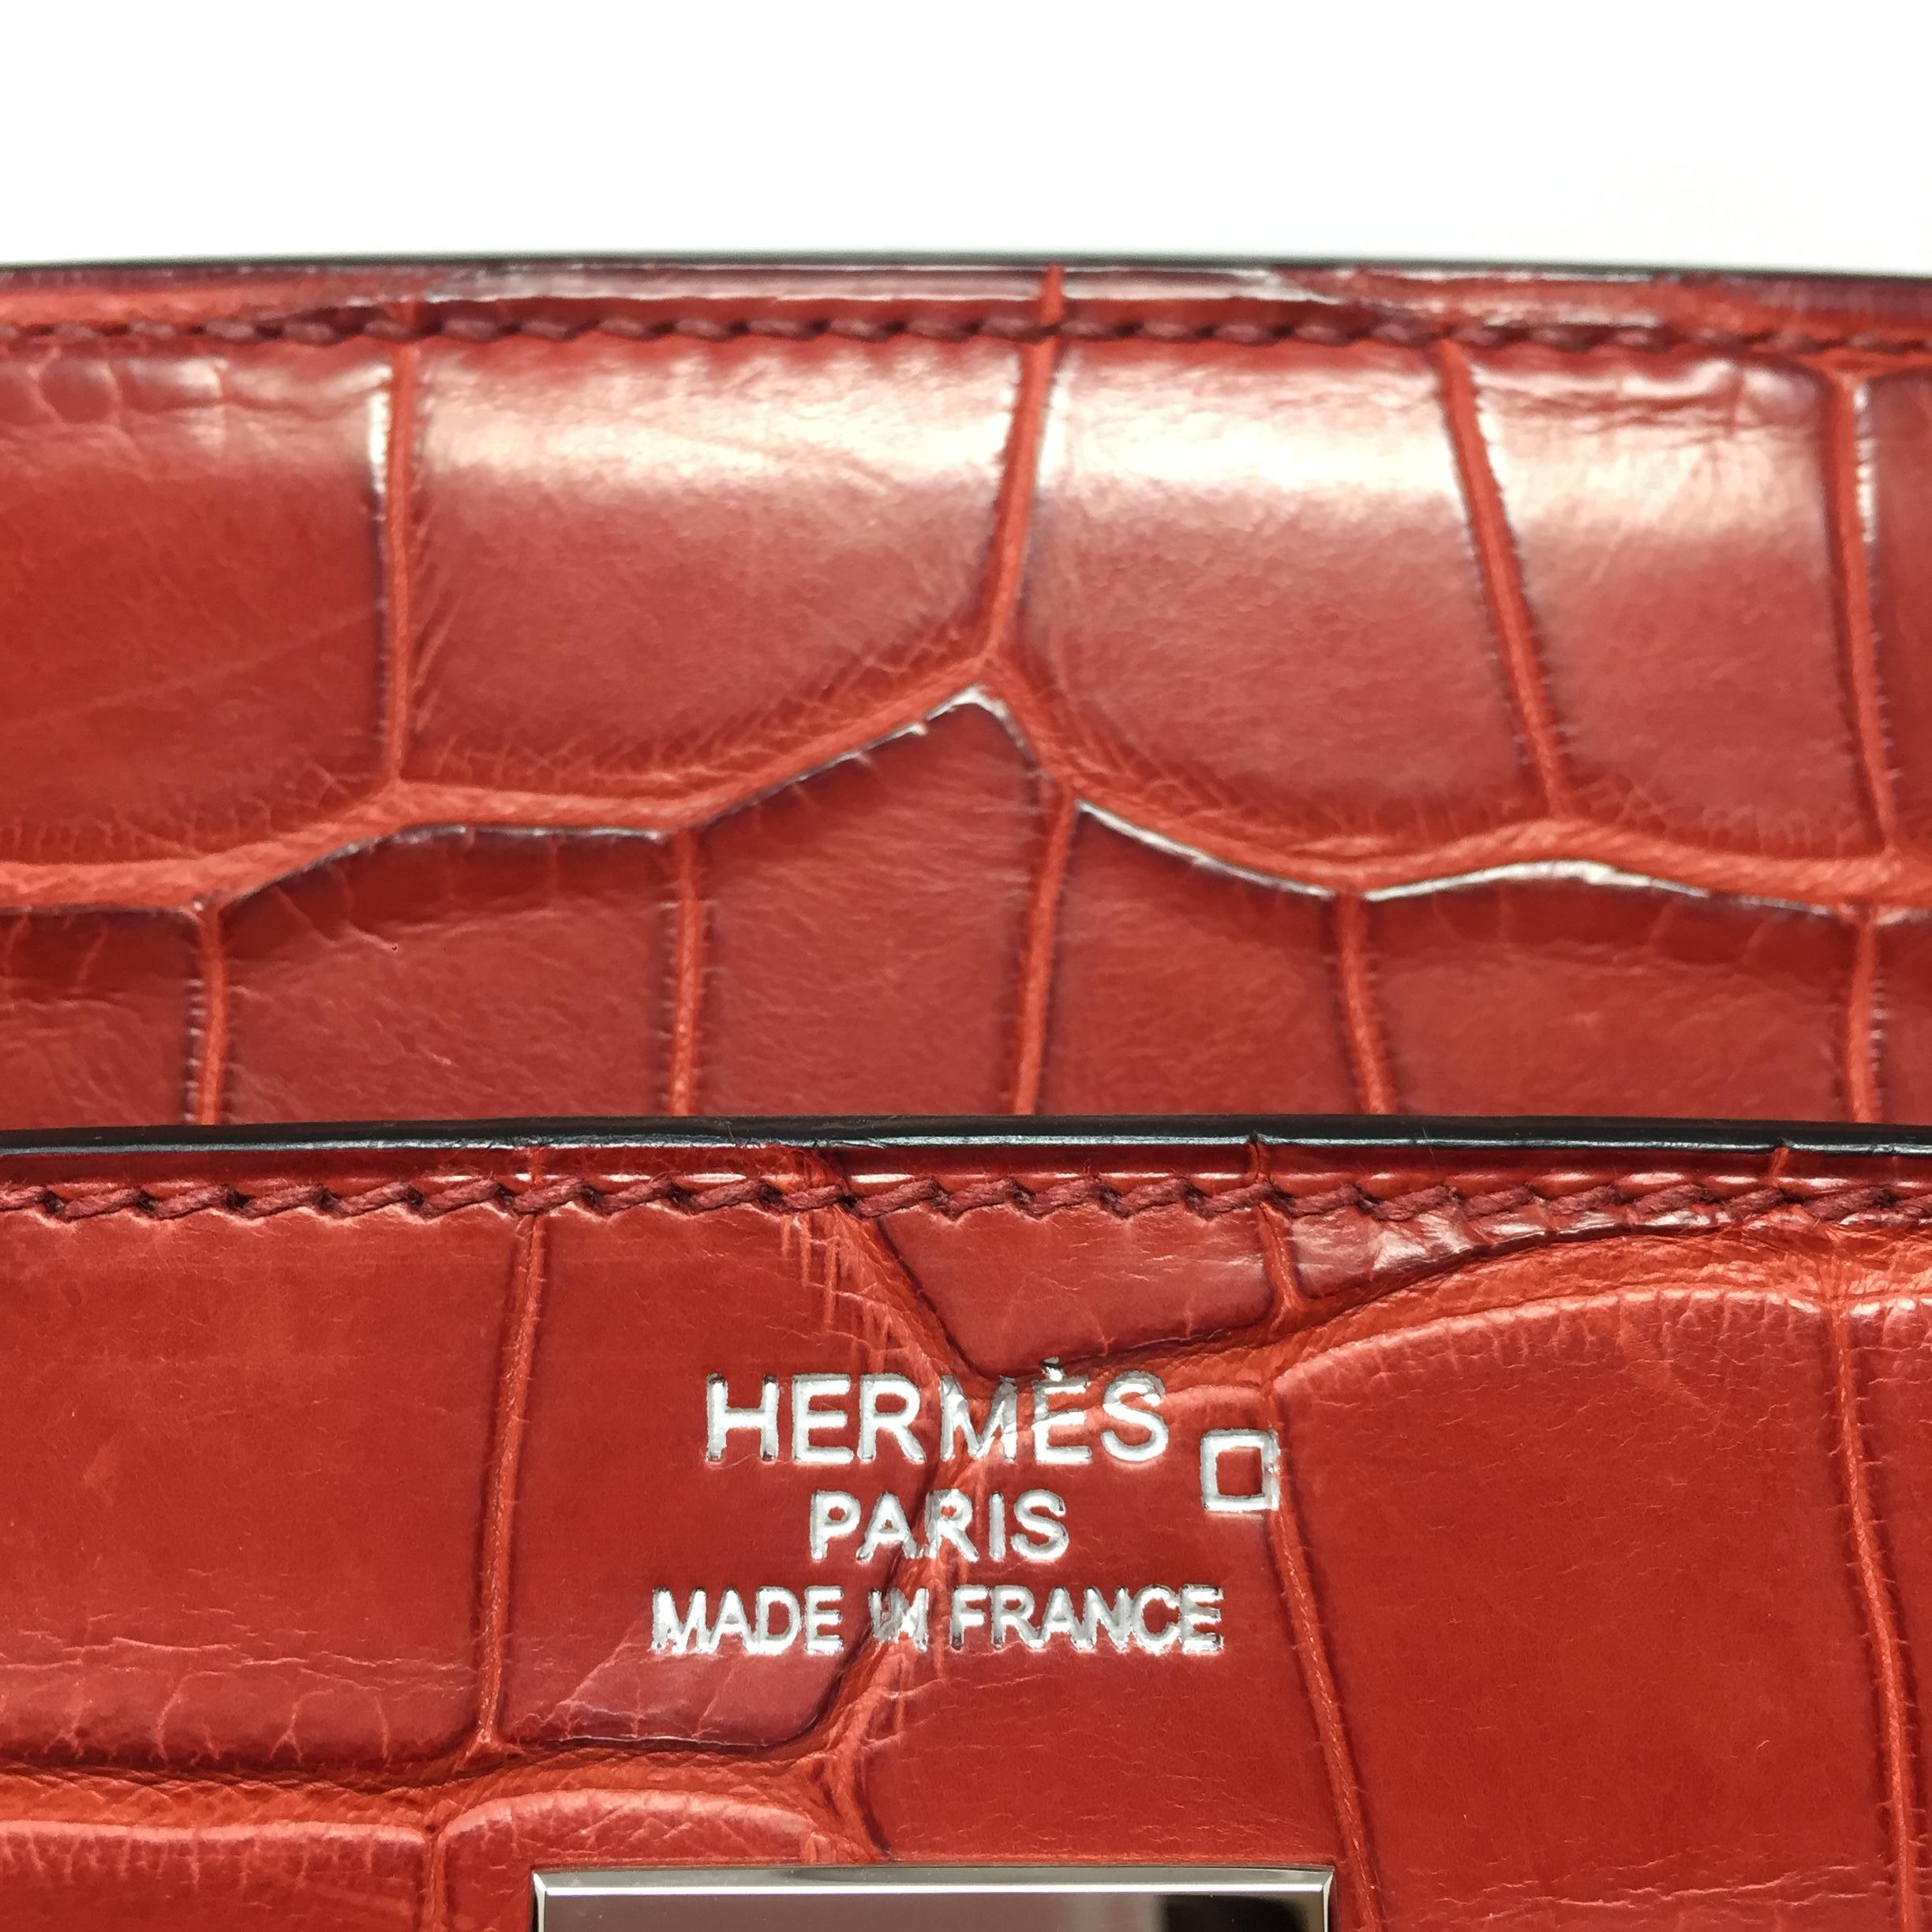 Hermes Paris Sac Rouge Matte Alligator Leather Birkin 40 Bag, 2013 3